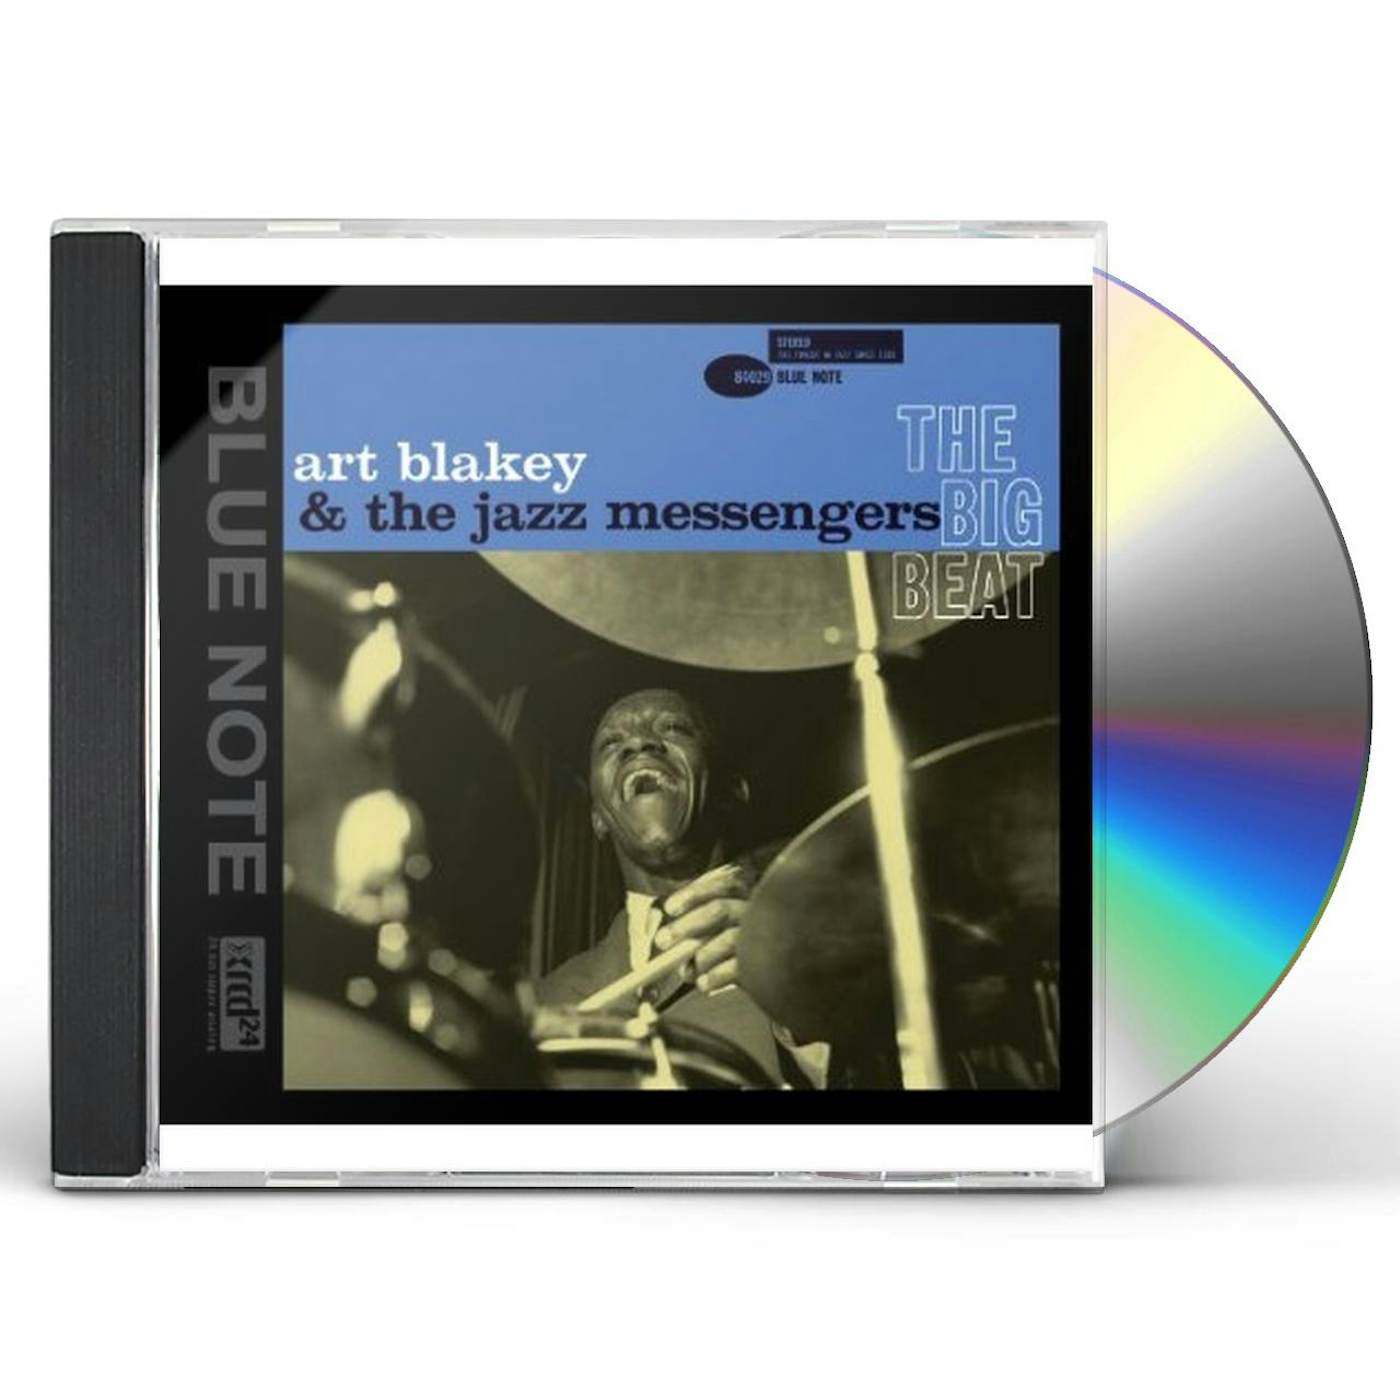 Art Blakey & The Jazz Messengers BIG BEAT CD